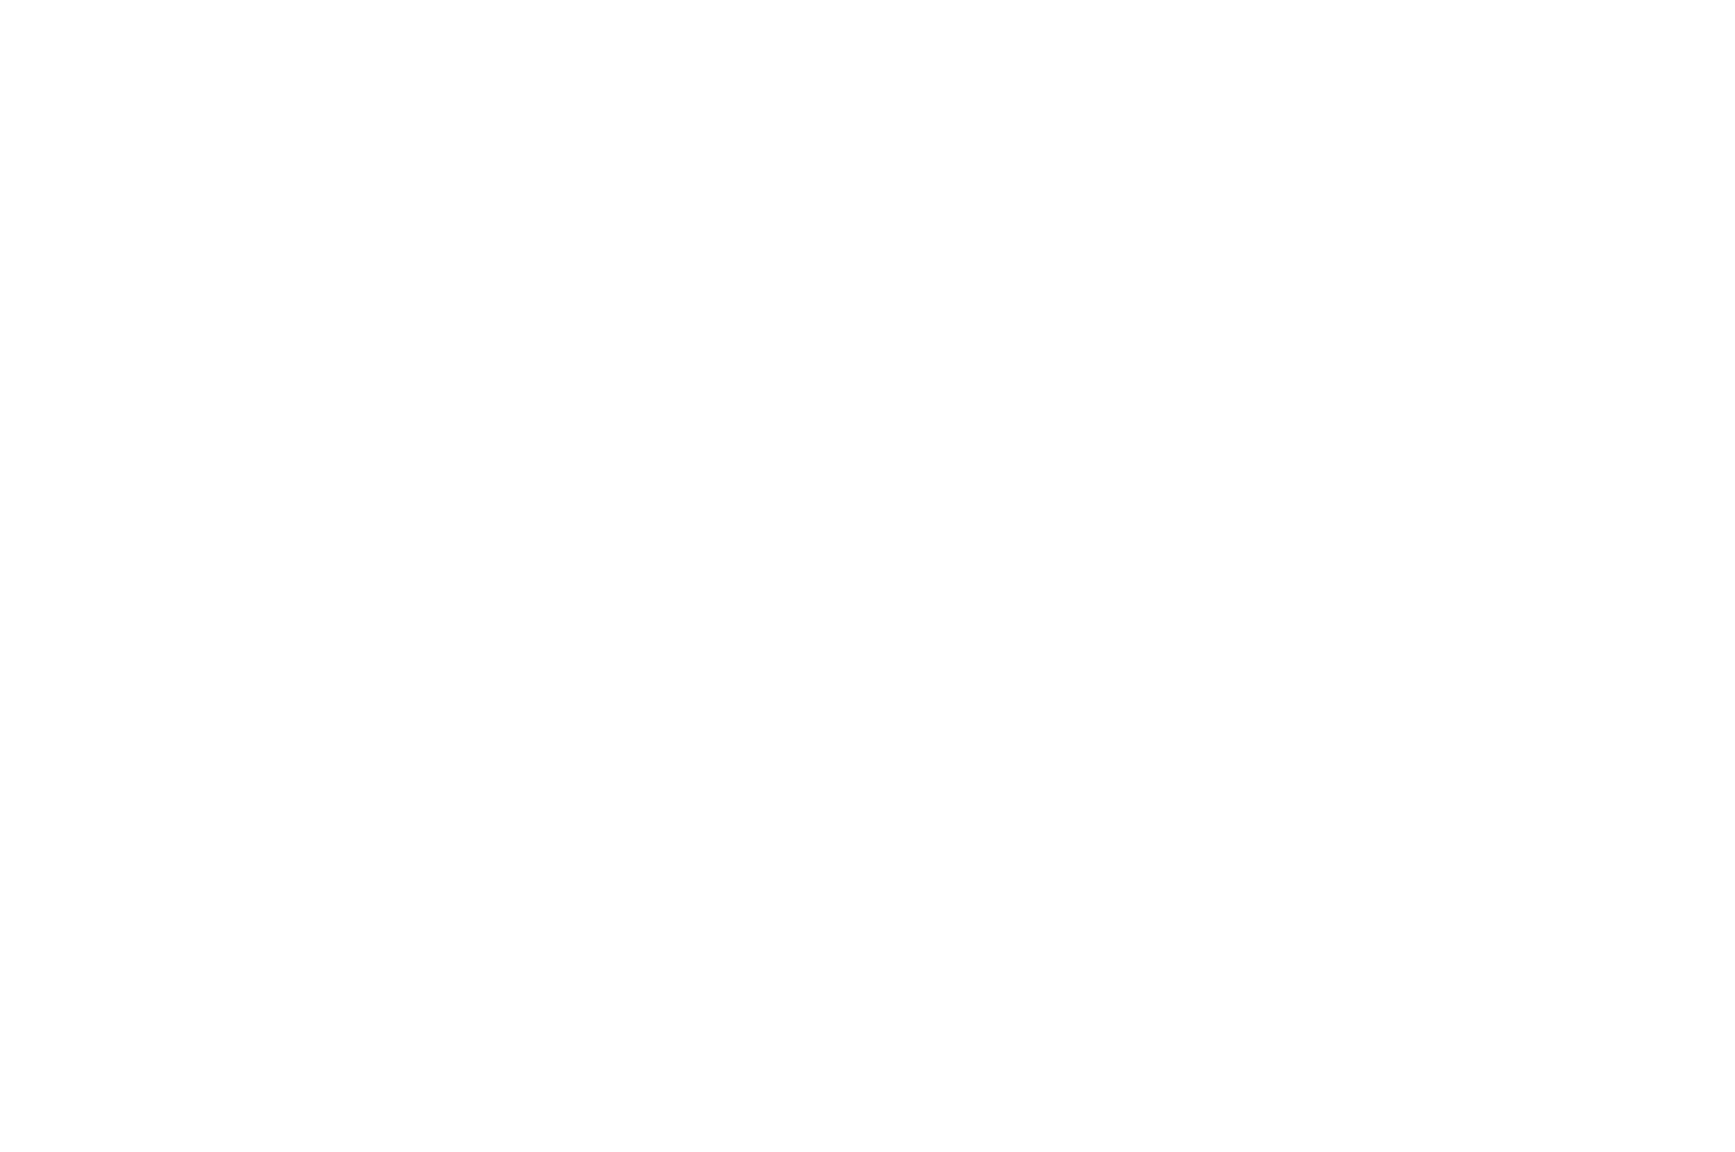 OUTSTANDING ACHIEVEMENT AWARD - BEST DIRECTOR - World Film Carnival - Singapore - 2020